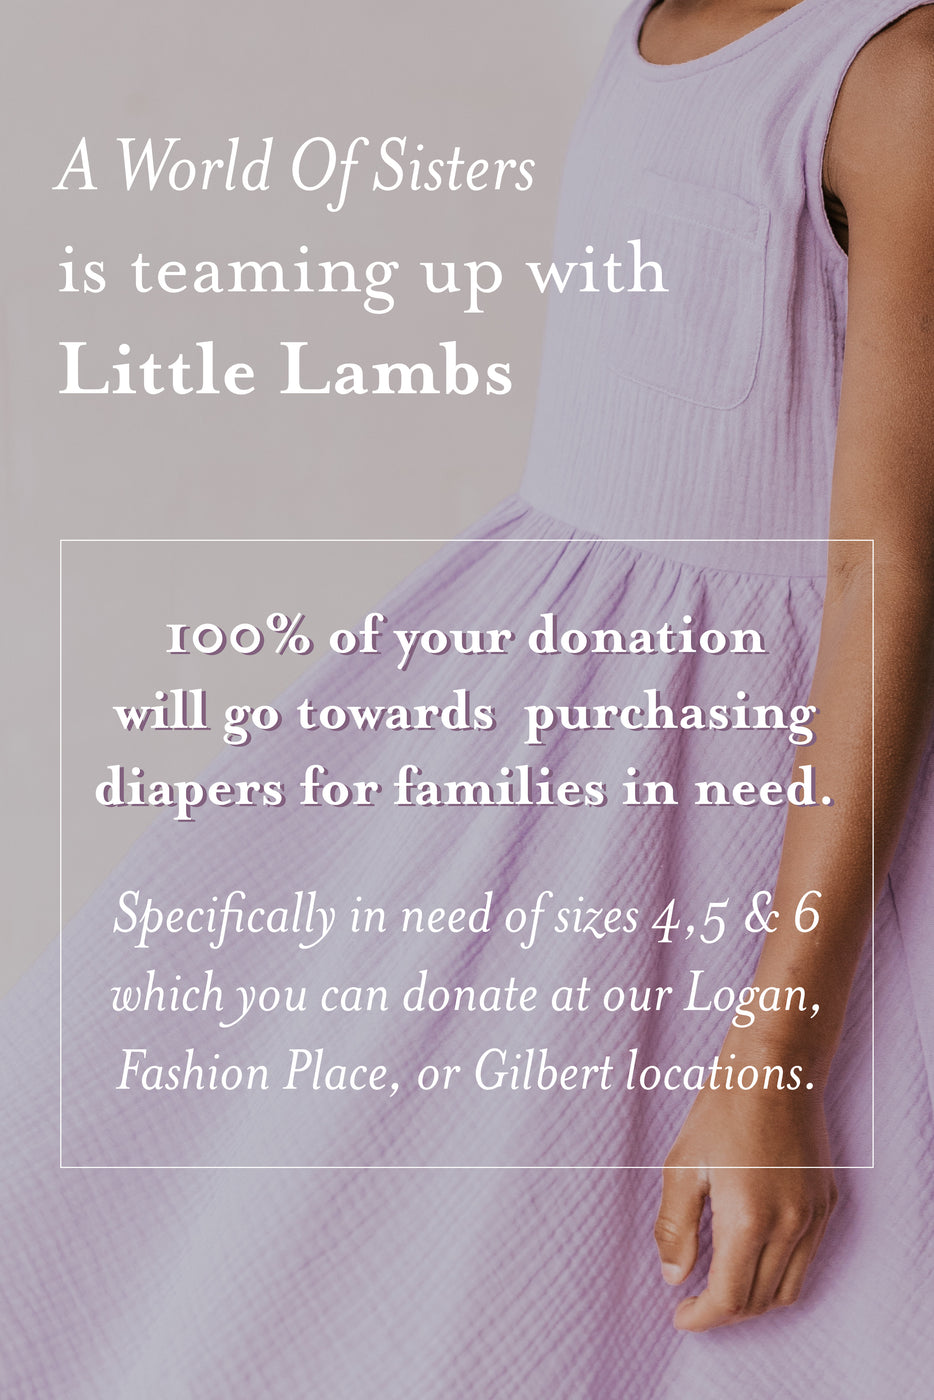 Little Lambs Diaper Donations